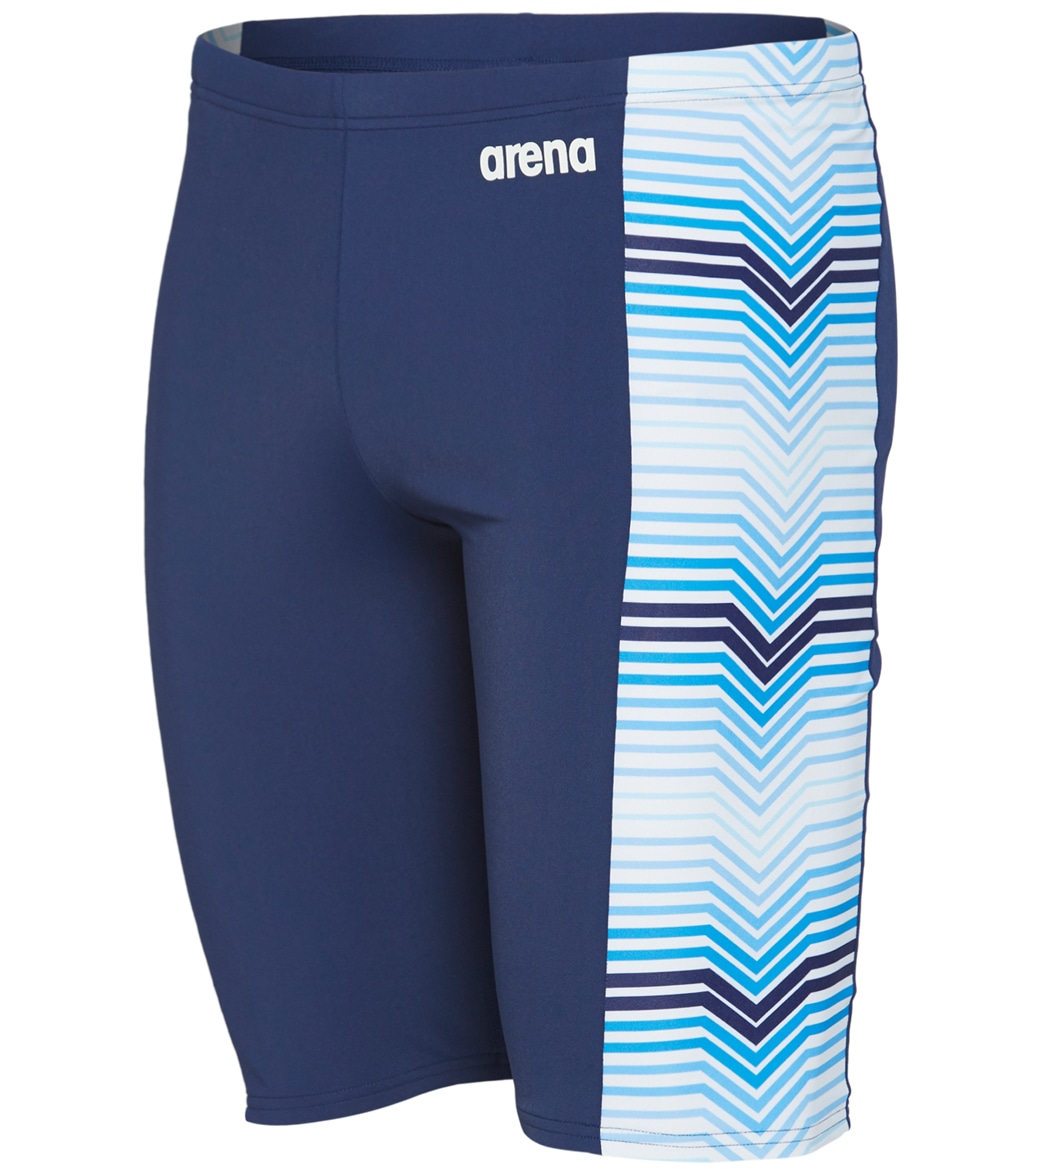 Arena Men's Multicolor Stripes Maxlife Jammer Swimsuit - Navy/Royal/Multi 22 - Swimoutlet.com